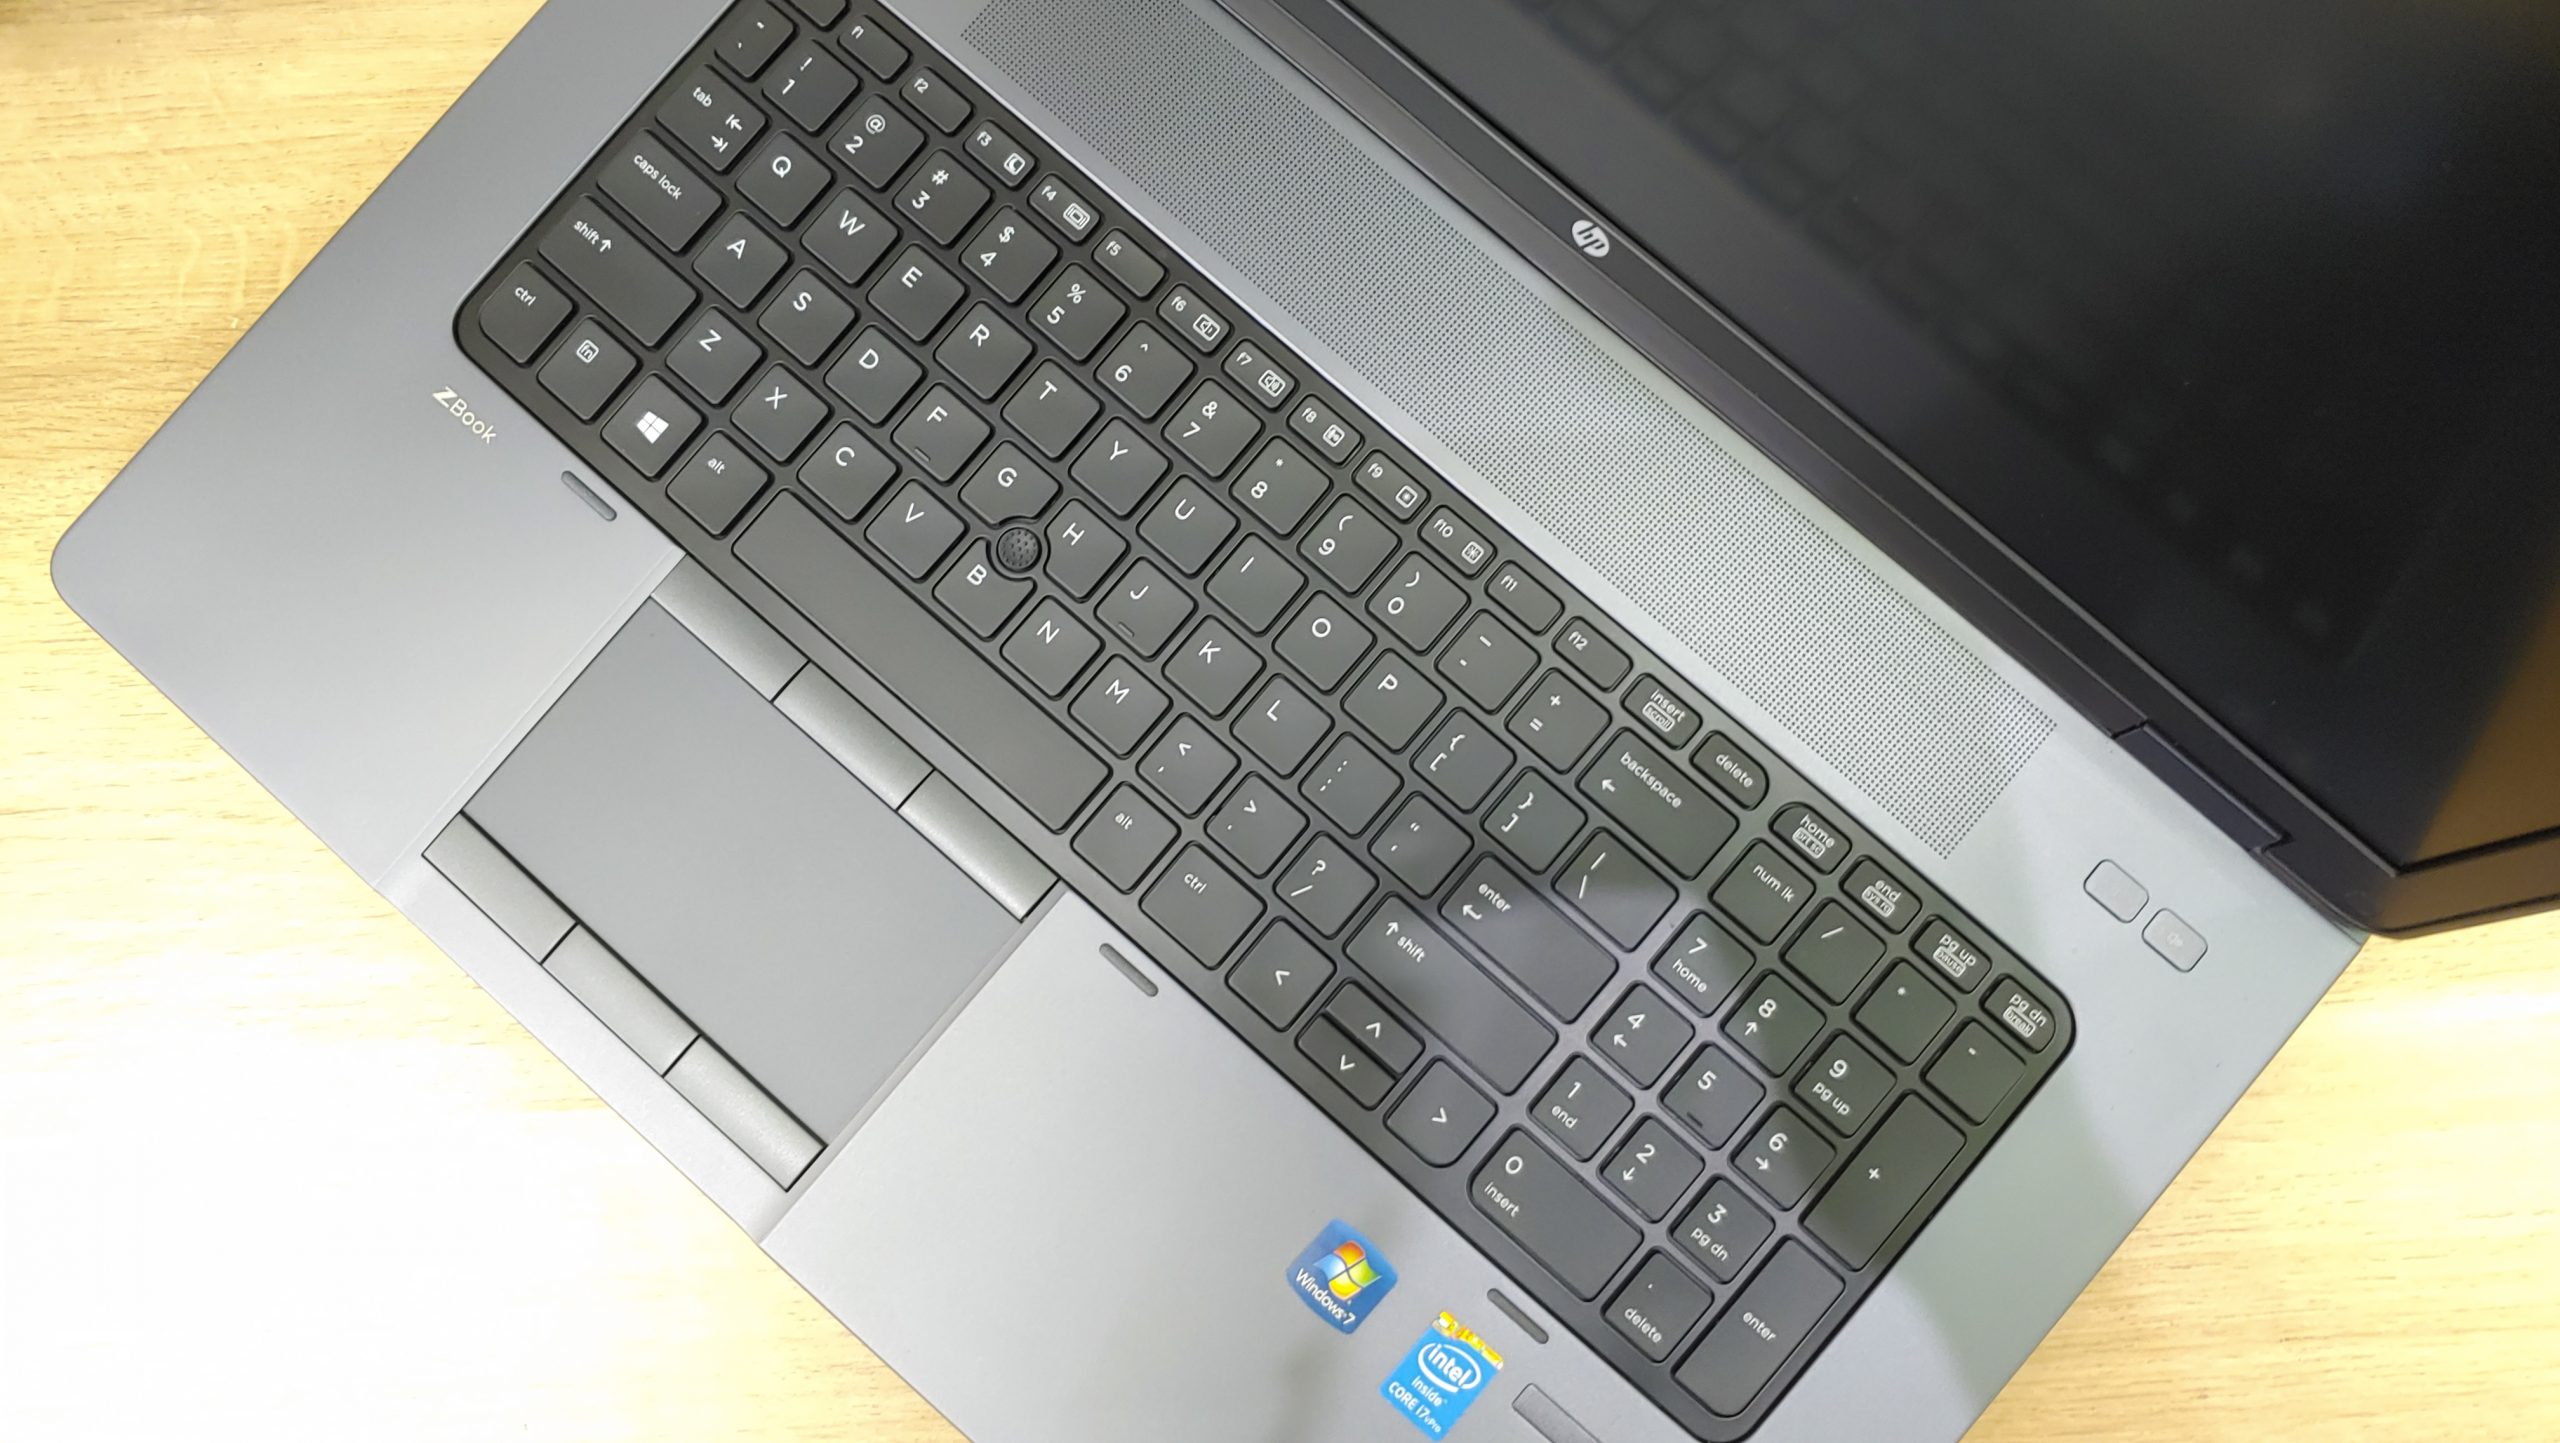 Laptop HP Zbook 17 G2